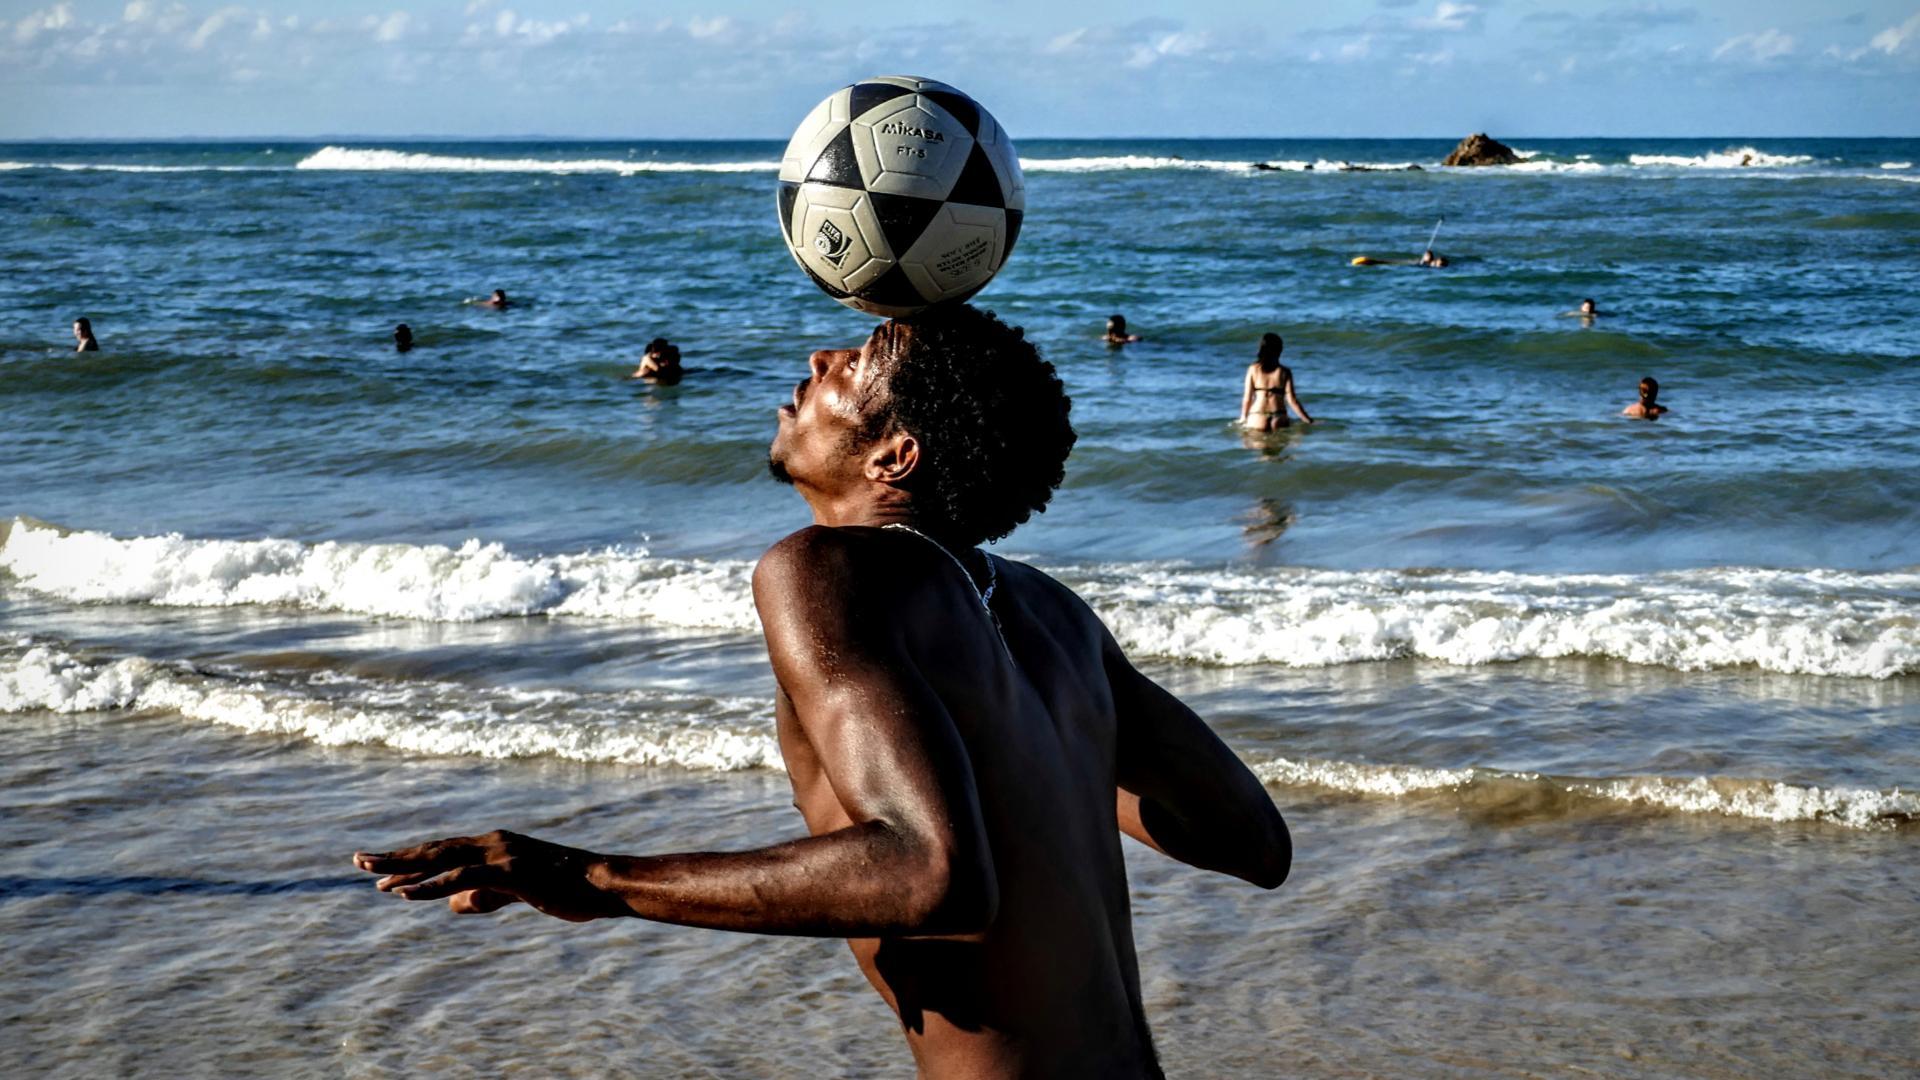 Soccer lovers on the beach in Brazil.